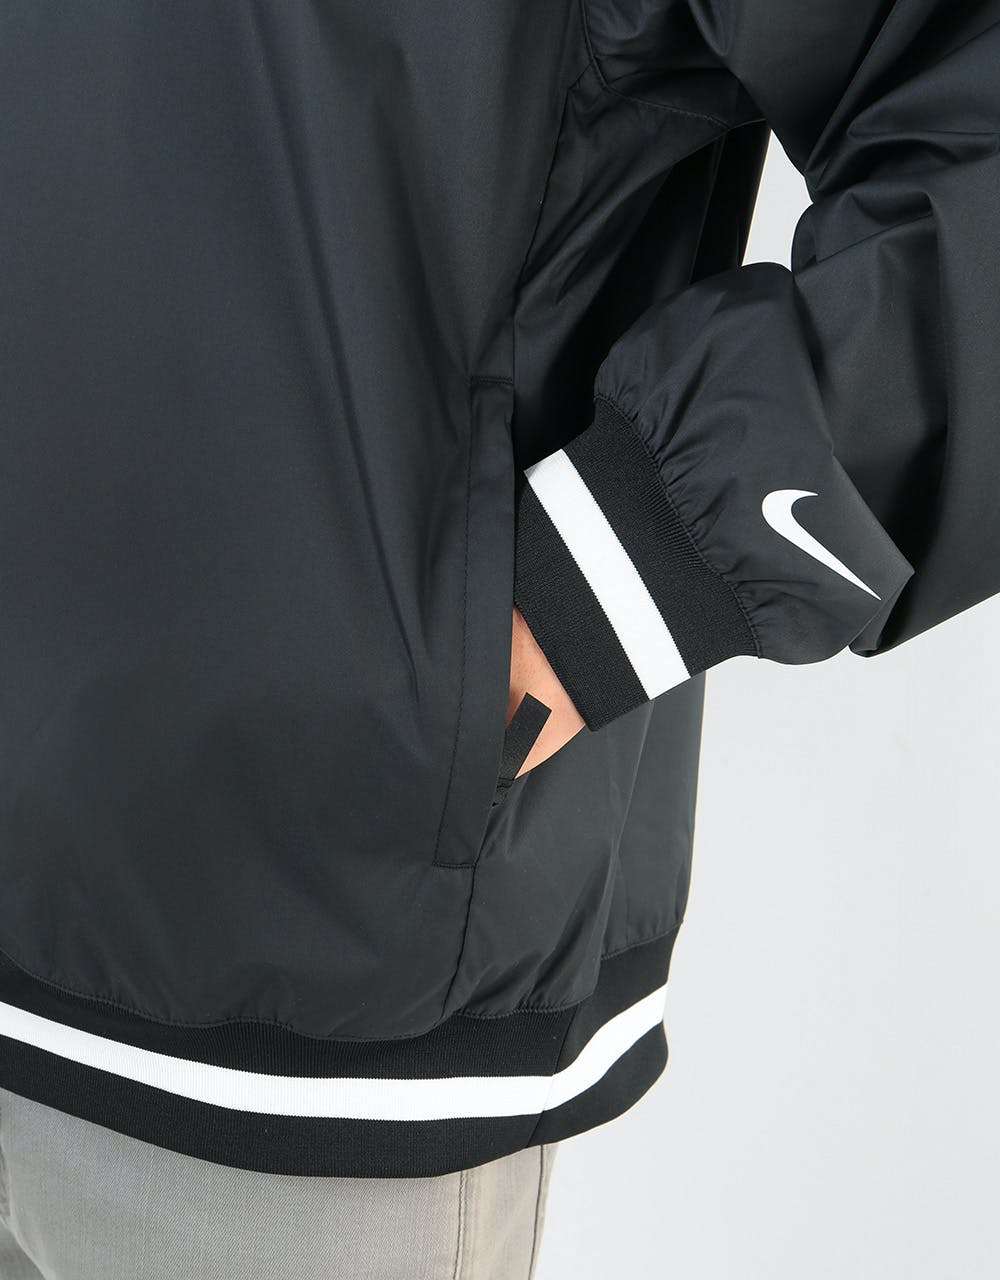 Nike SB Wind Shirt - Black/White